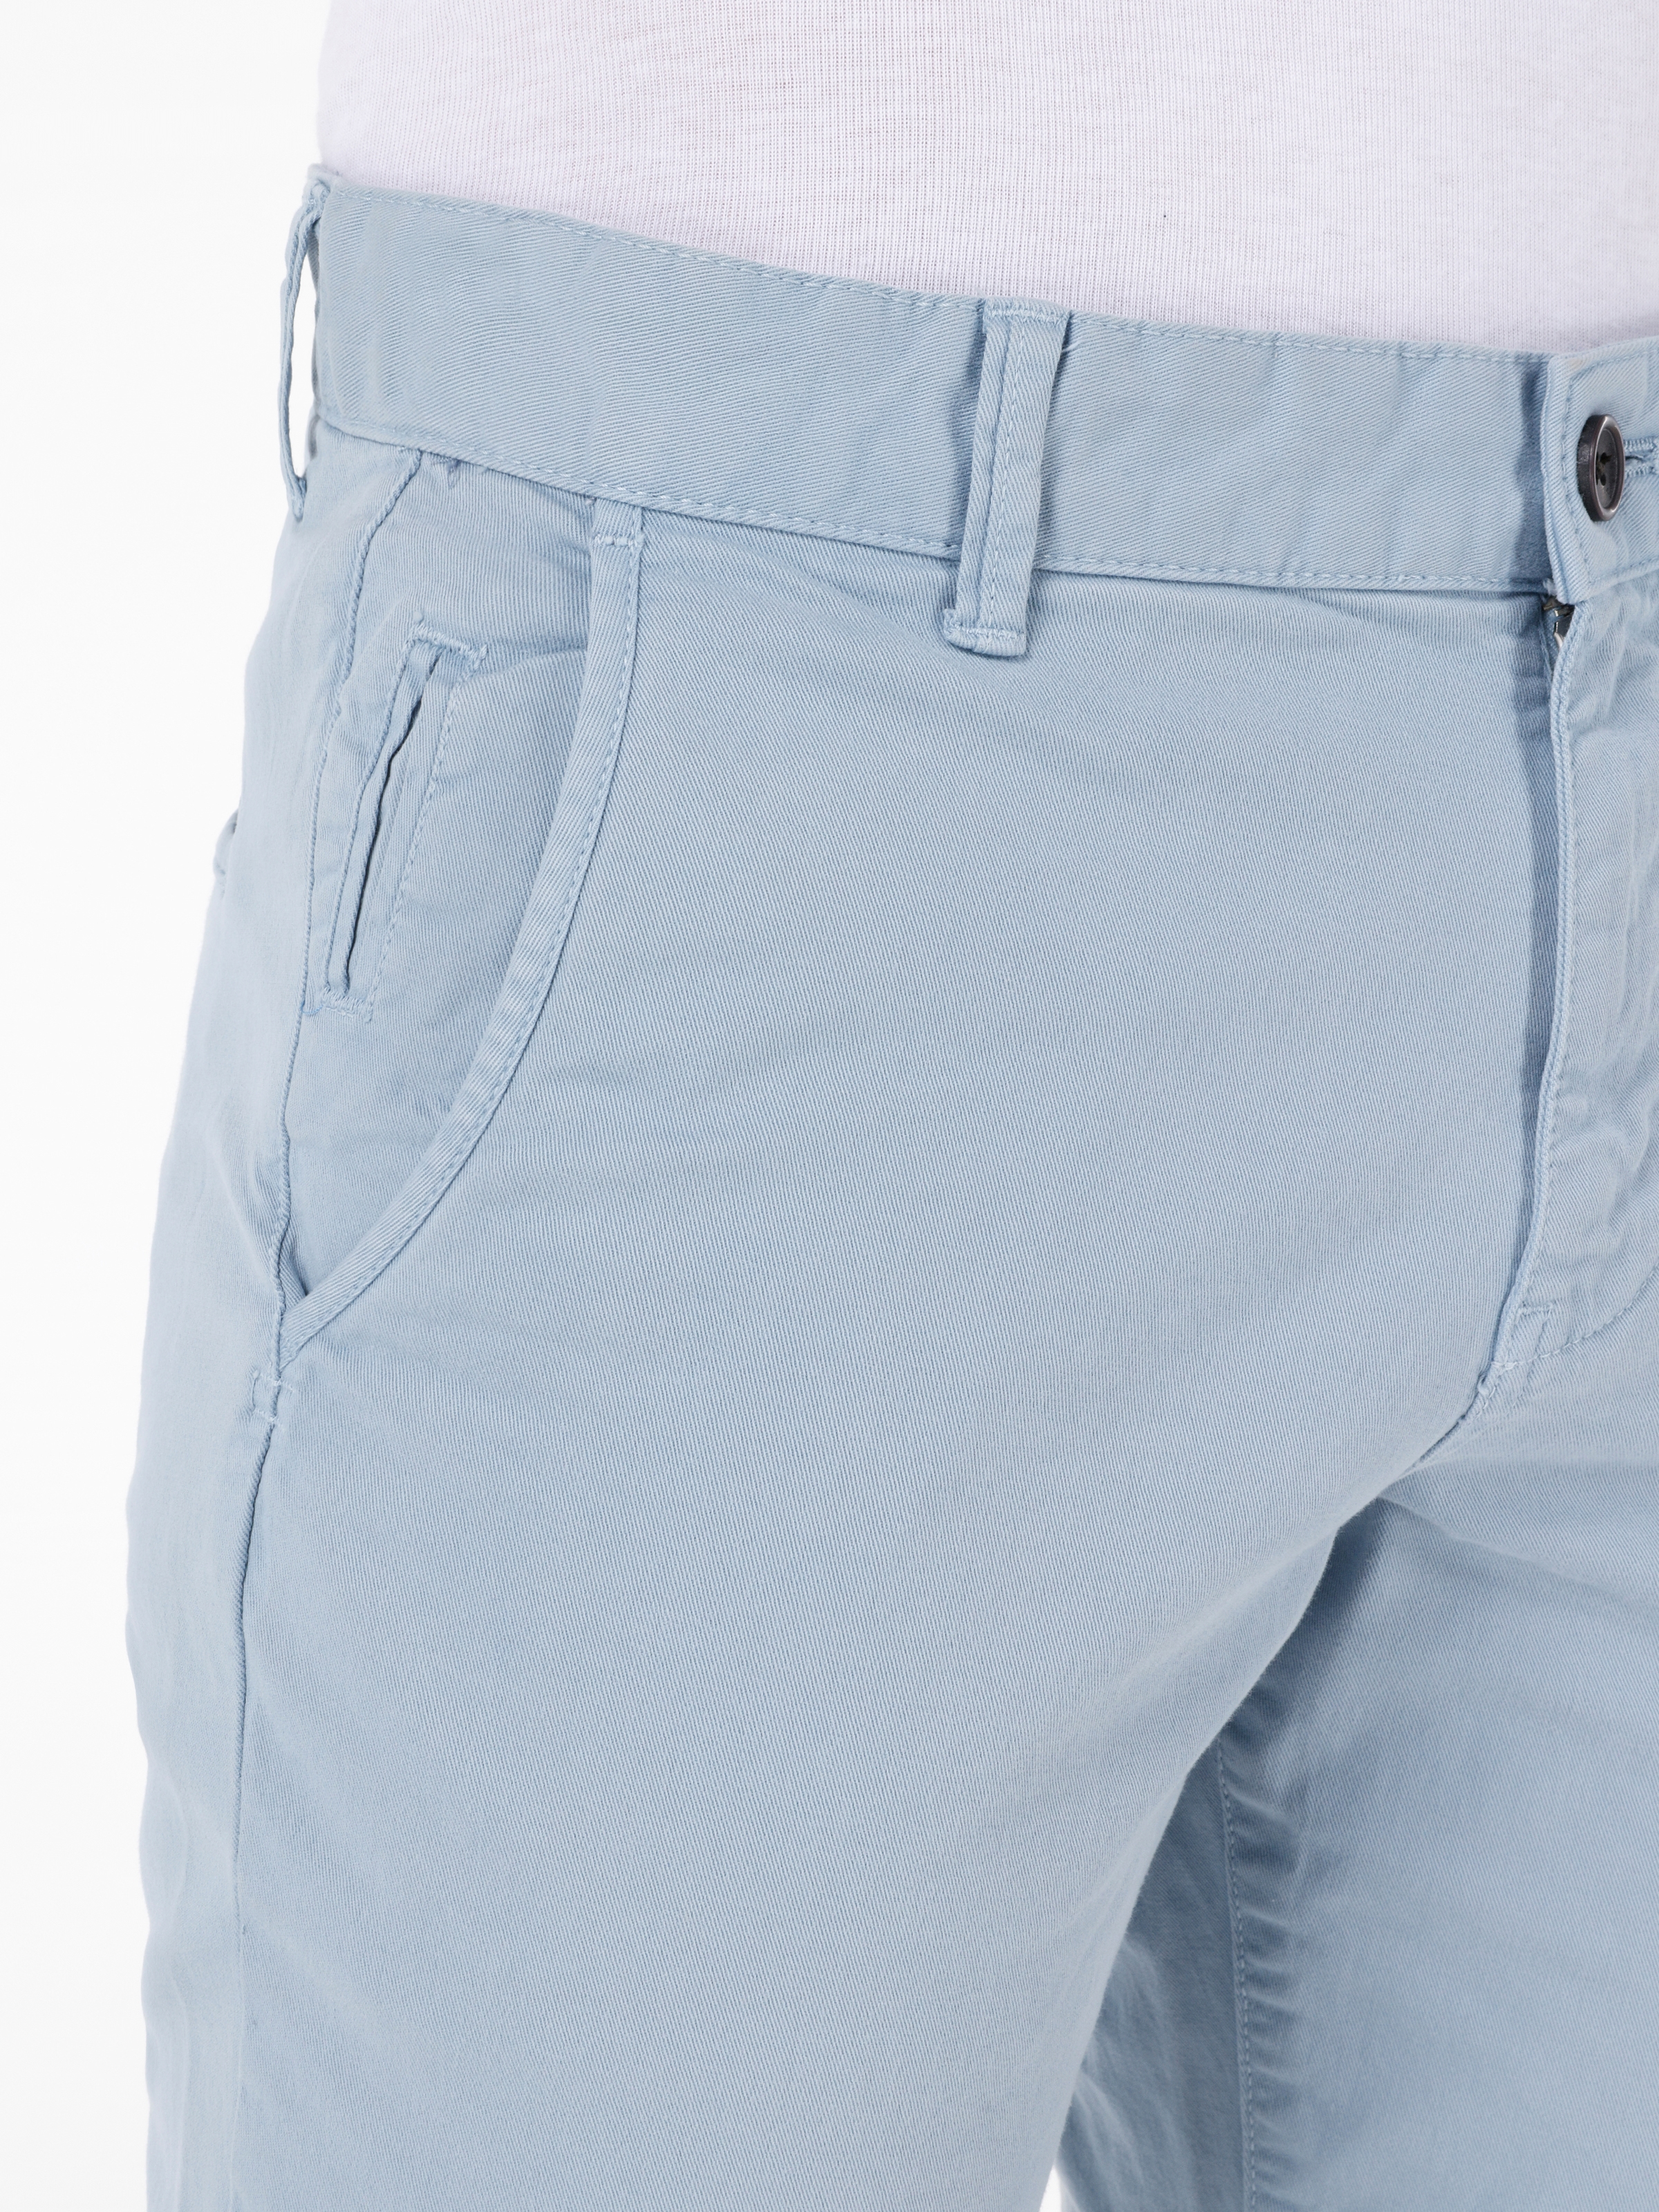 Afișați detalii pentru Pantaloni Slim Fit Albastri De Barbati